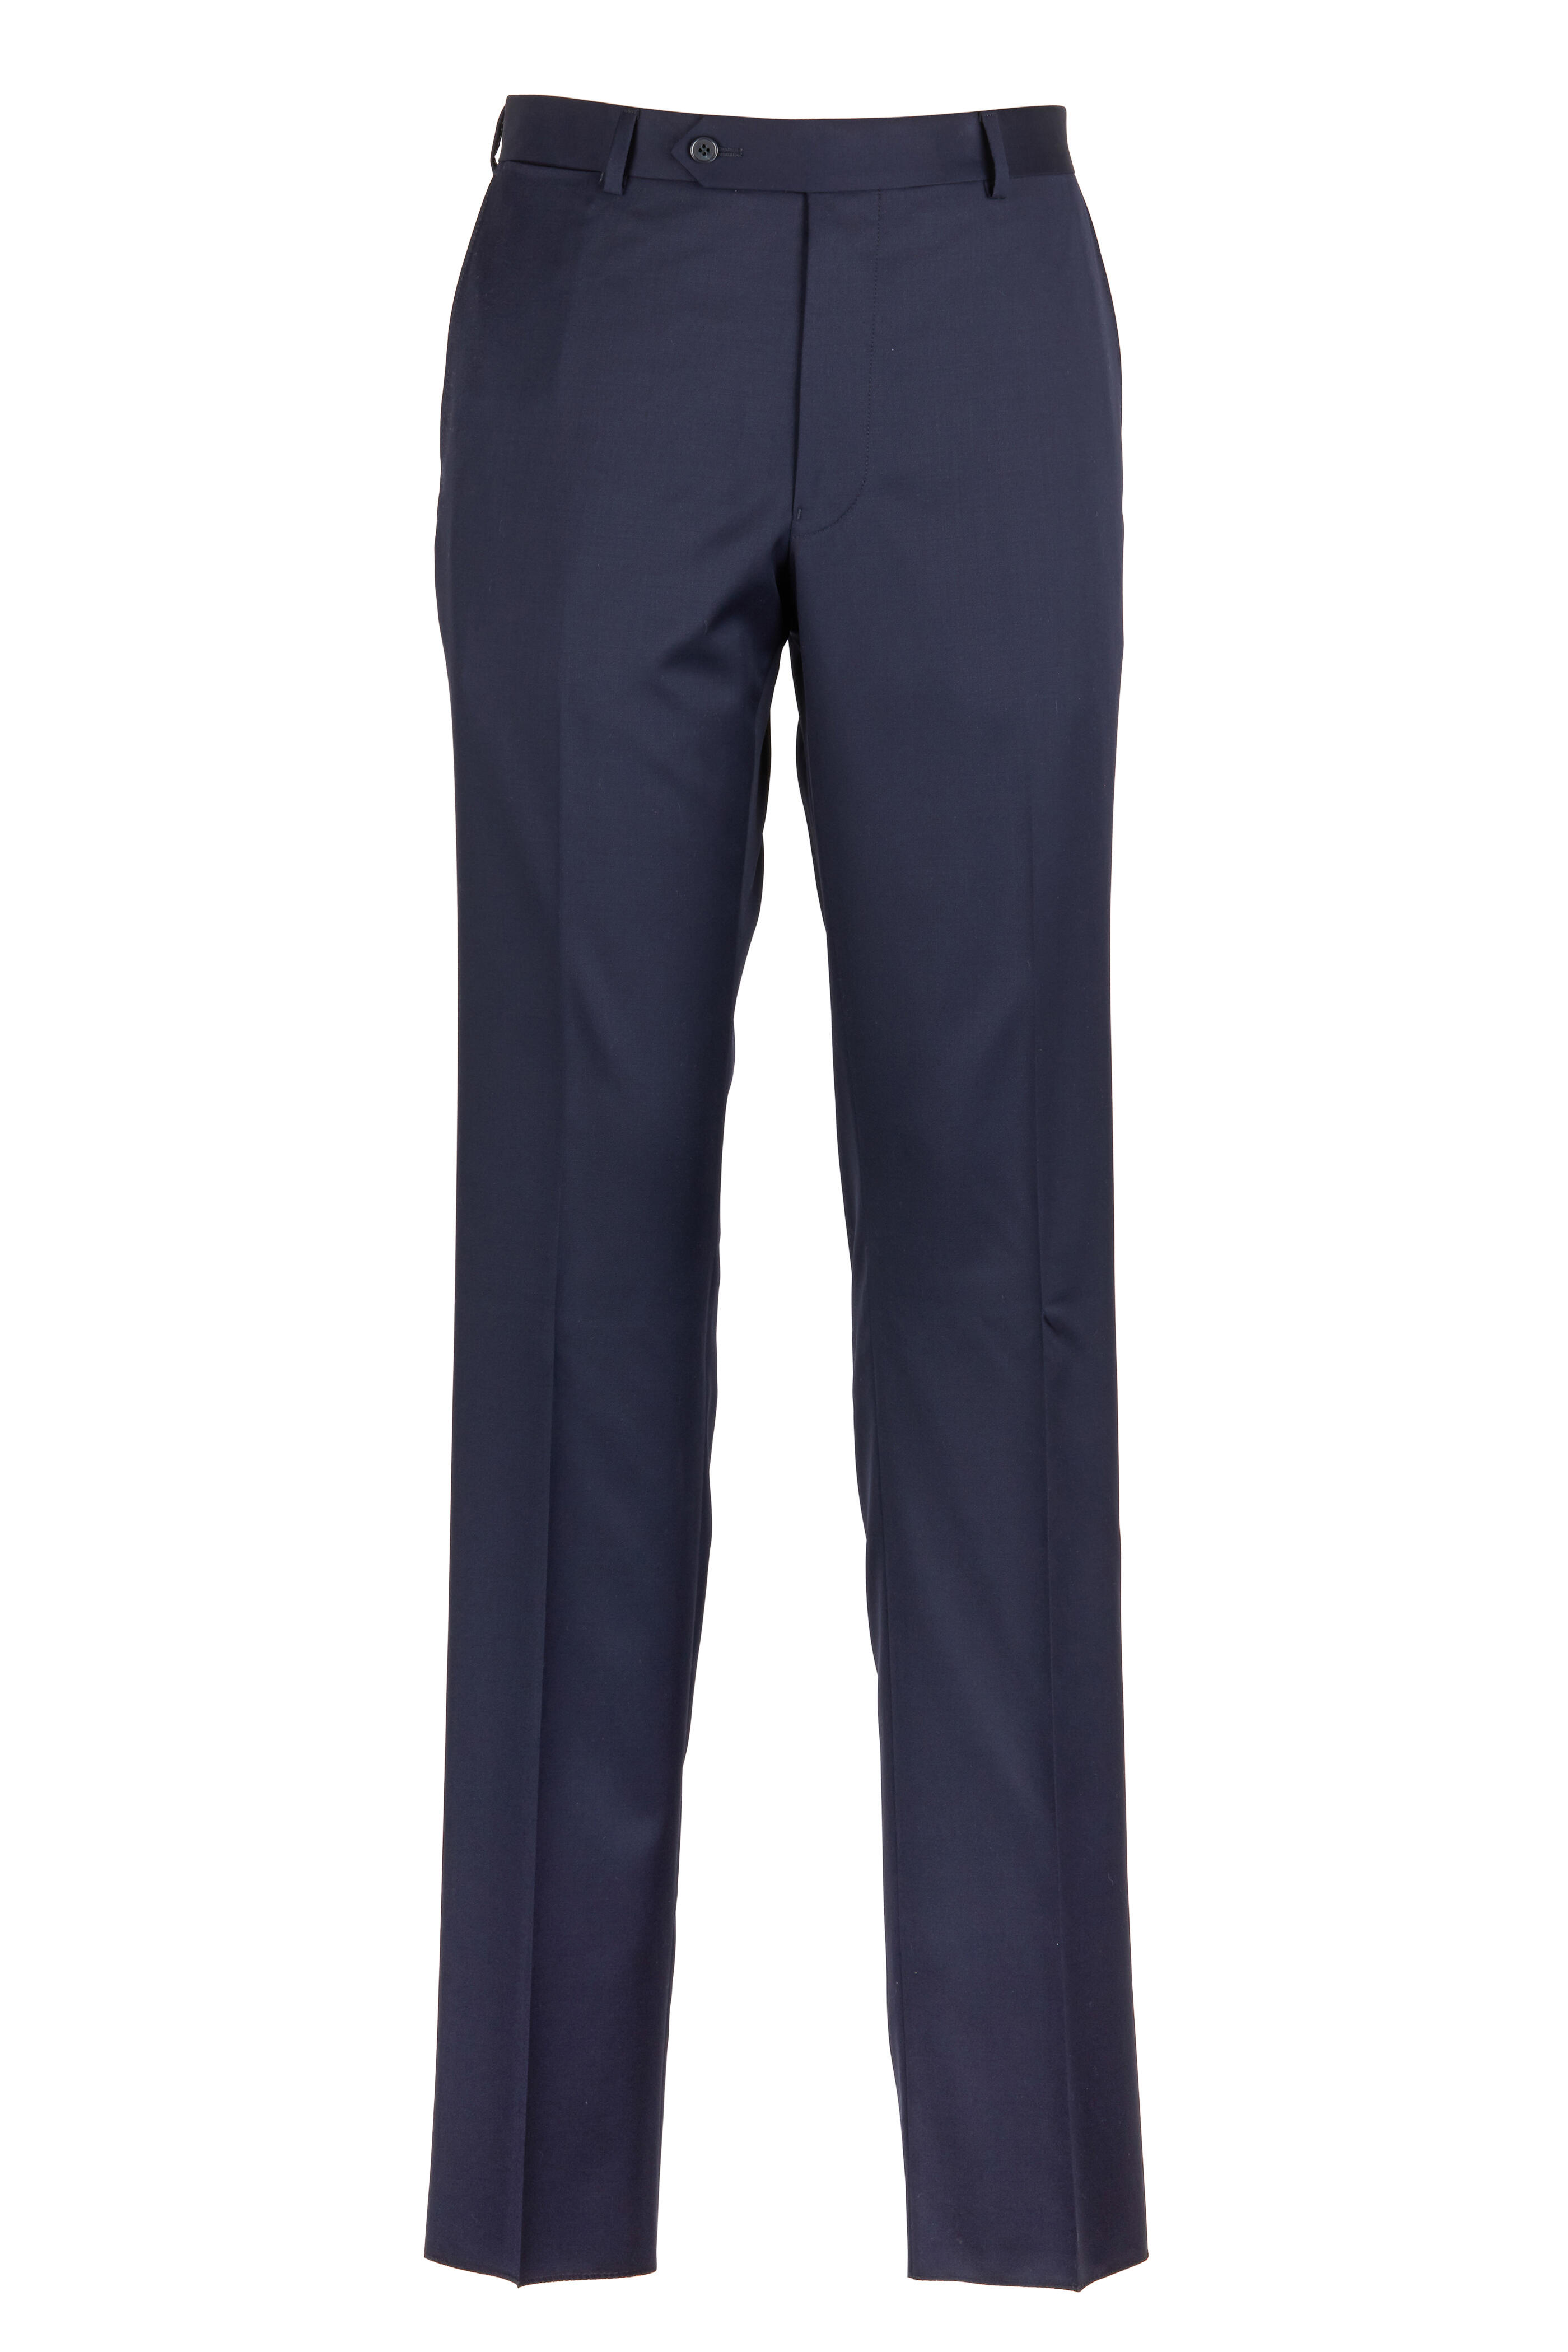 Samuelsohn - Becket Solid Navy Blue Wool Suit | Mitchell Stores